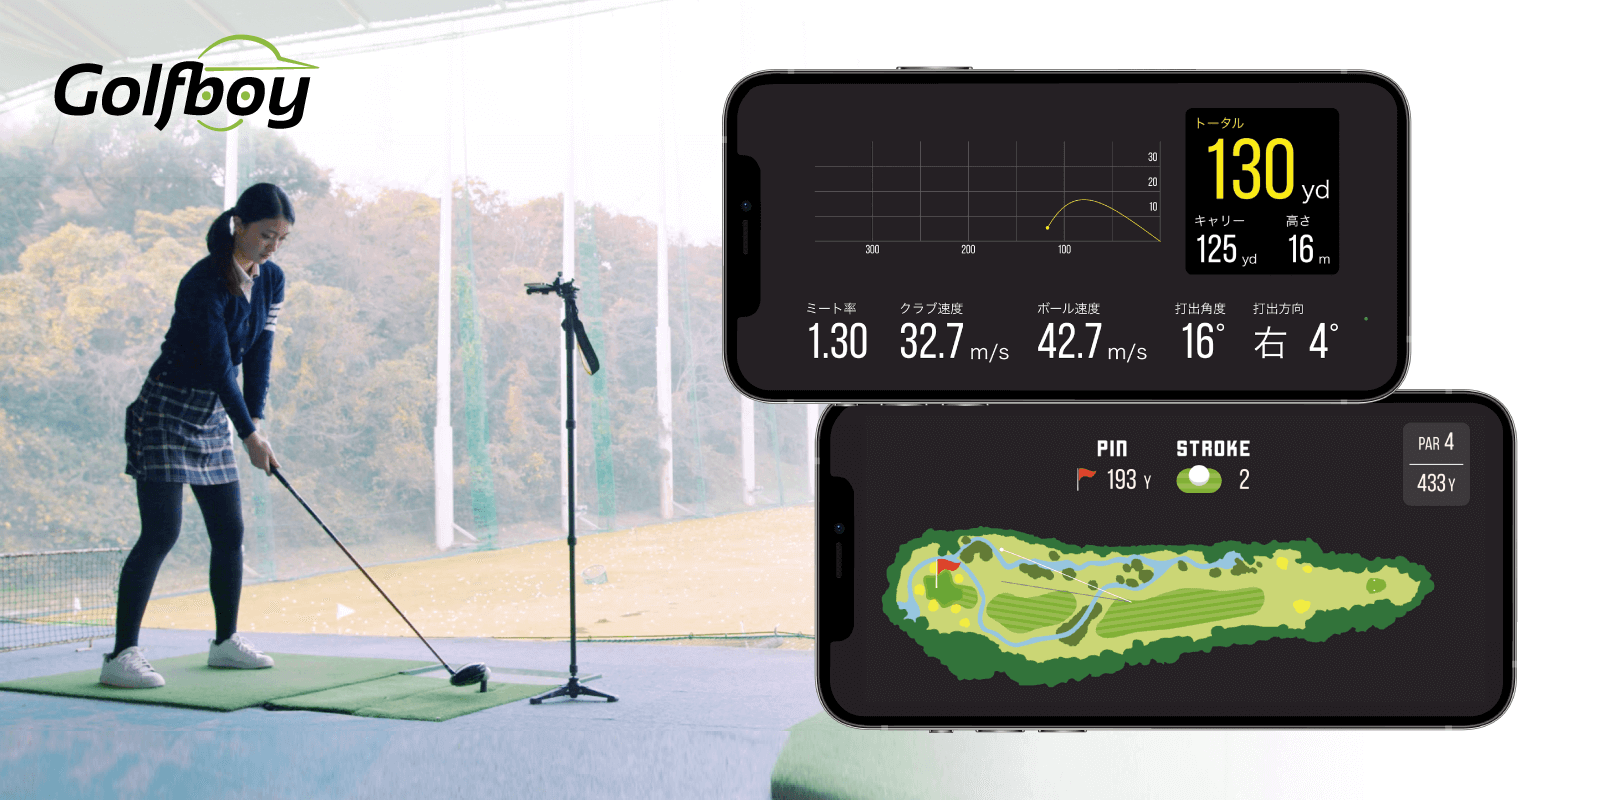 Golfboy :launch monitor,swing analysis,putting analysis,round 